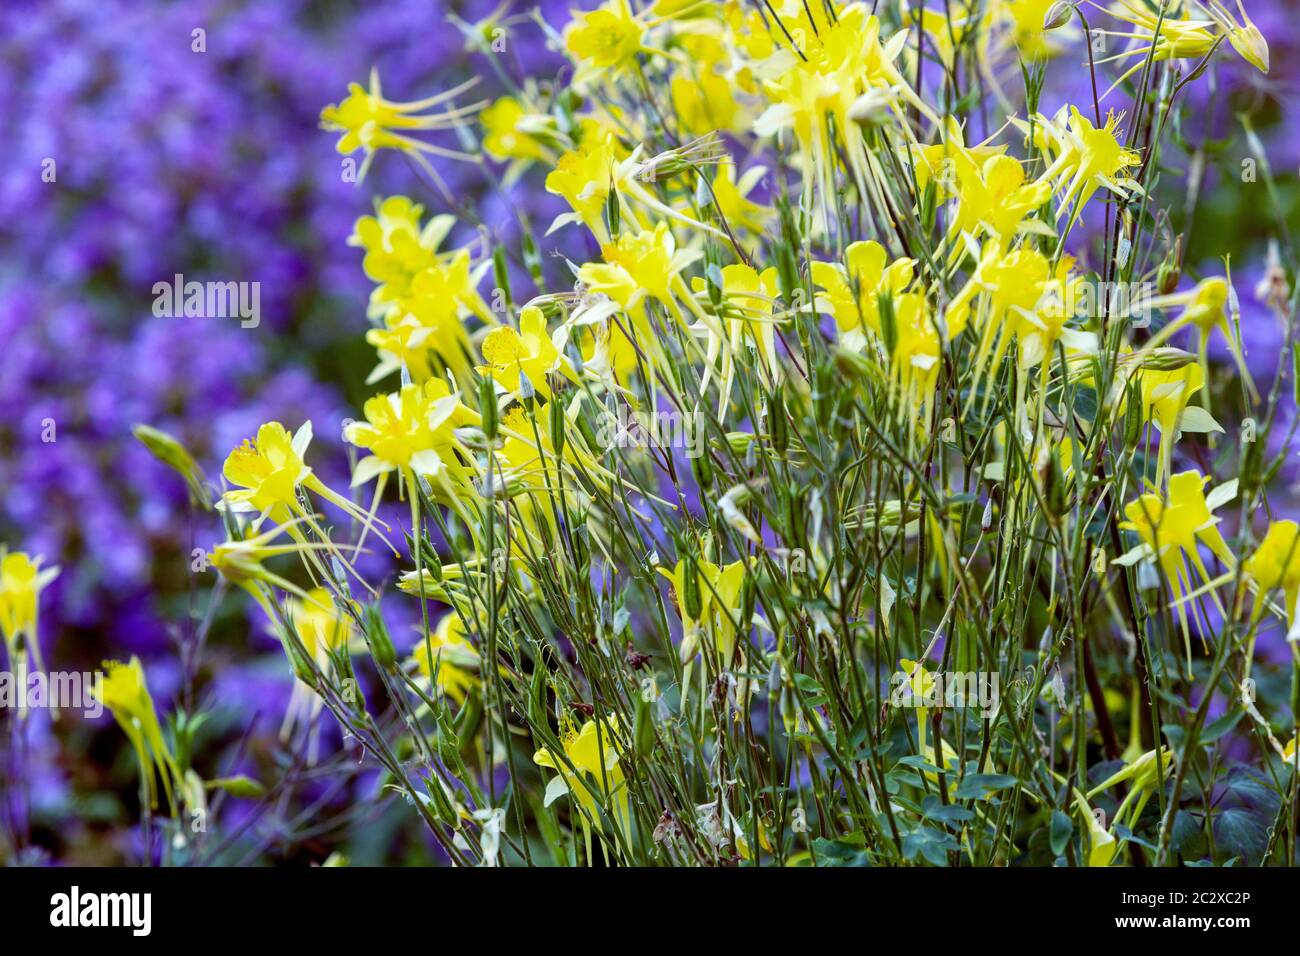 Amarillo columbina grumos verano flores jardín amarillo azul Foto de stock